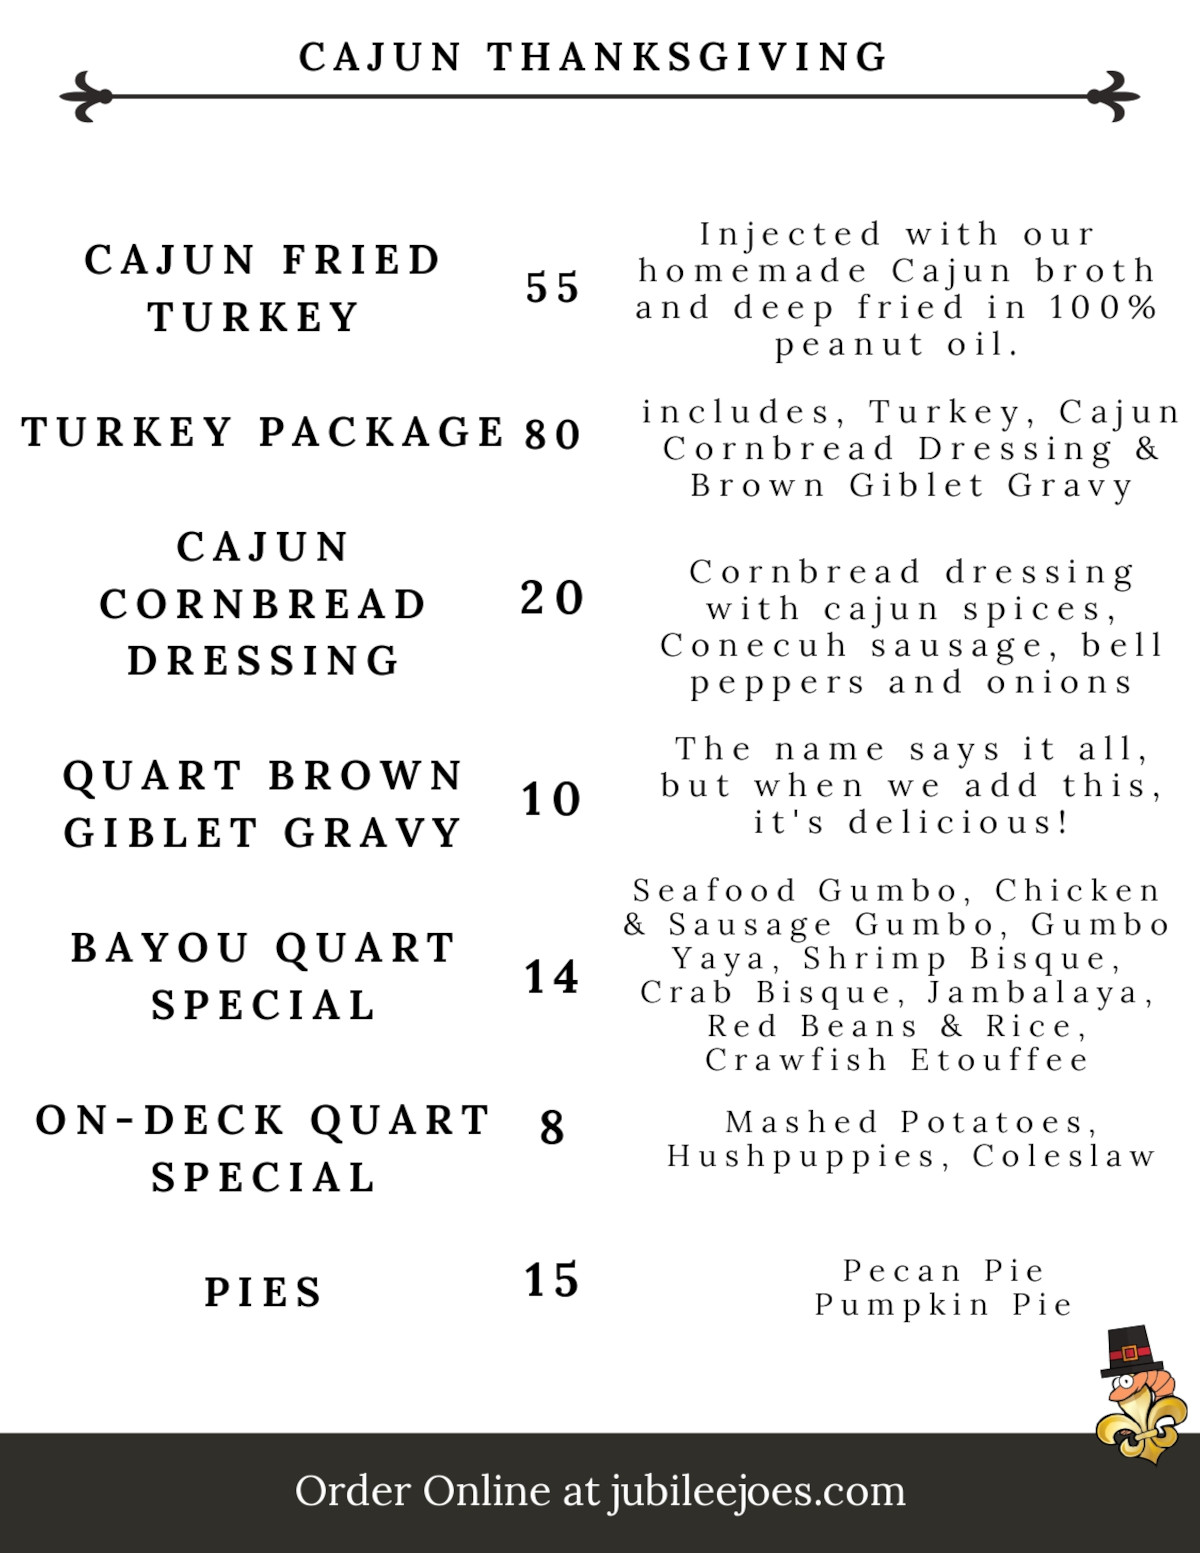 Cajun Fried Turkey Flyer 2